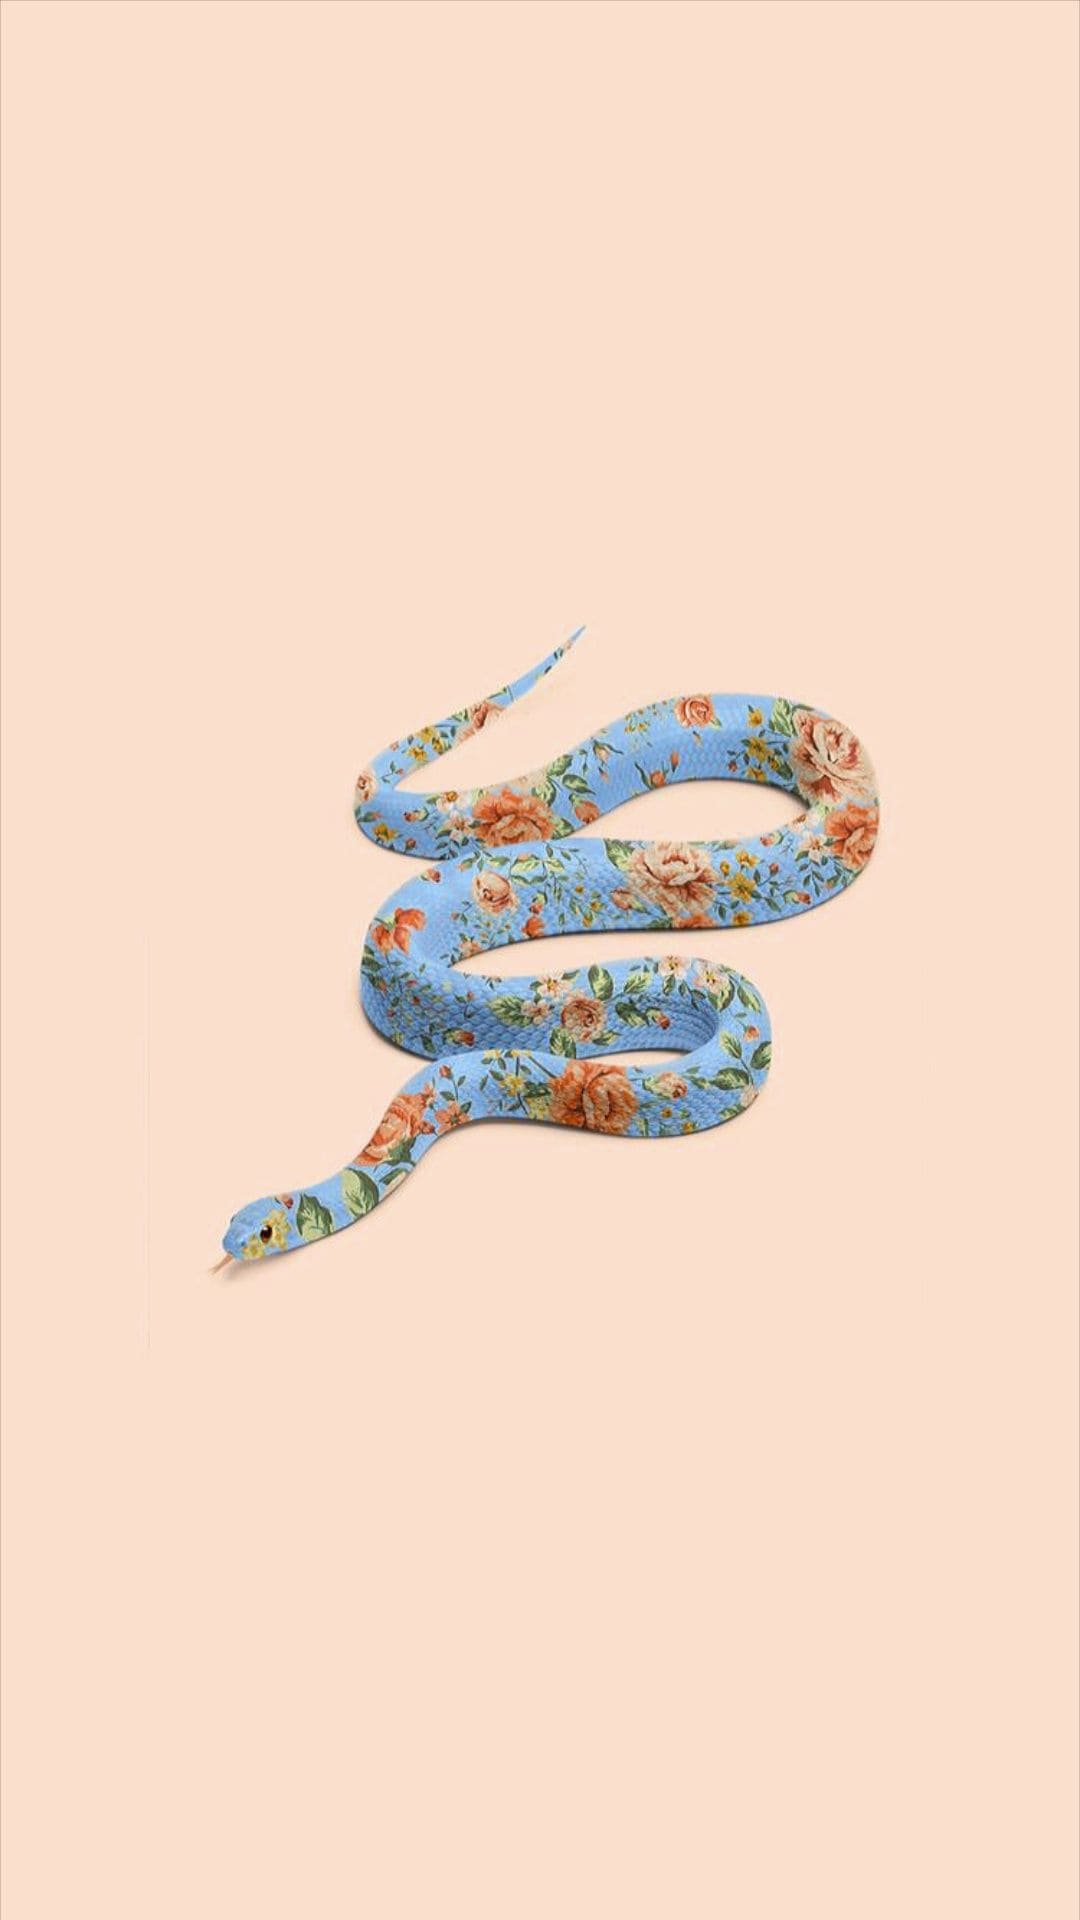 Snake Wallpapers - Top 35 Best Snake Backgrounds Download